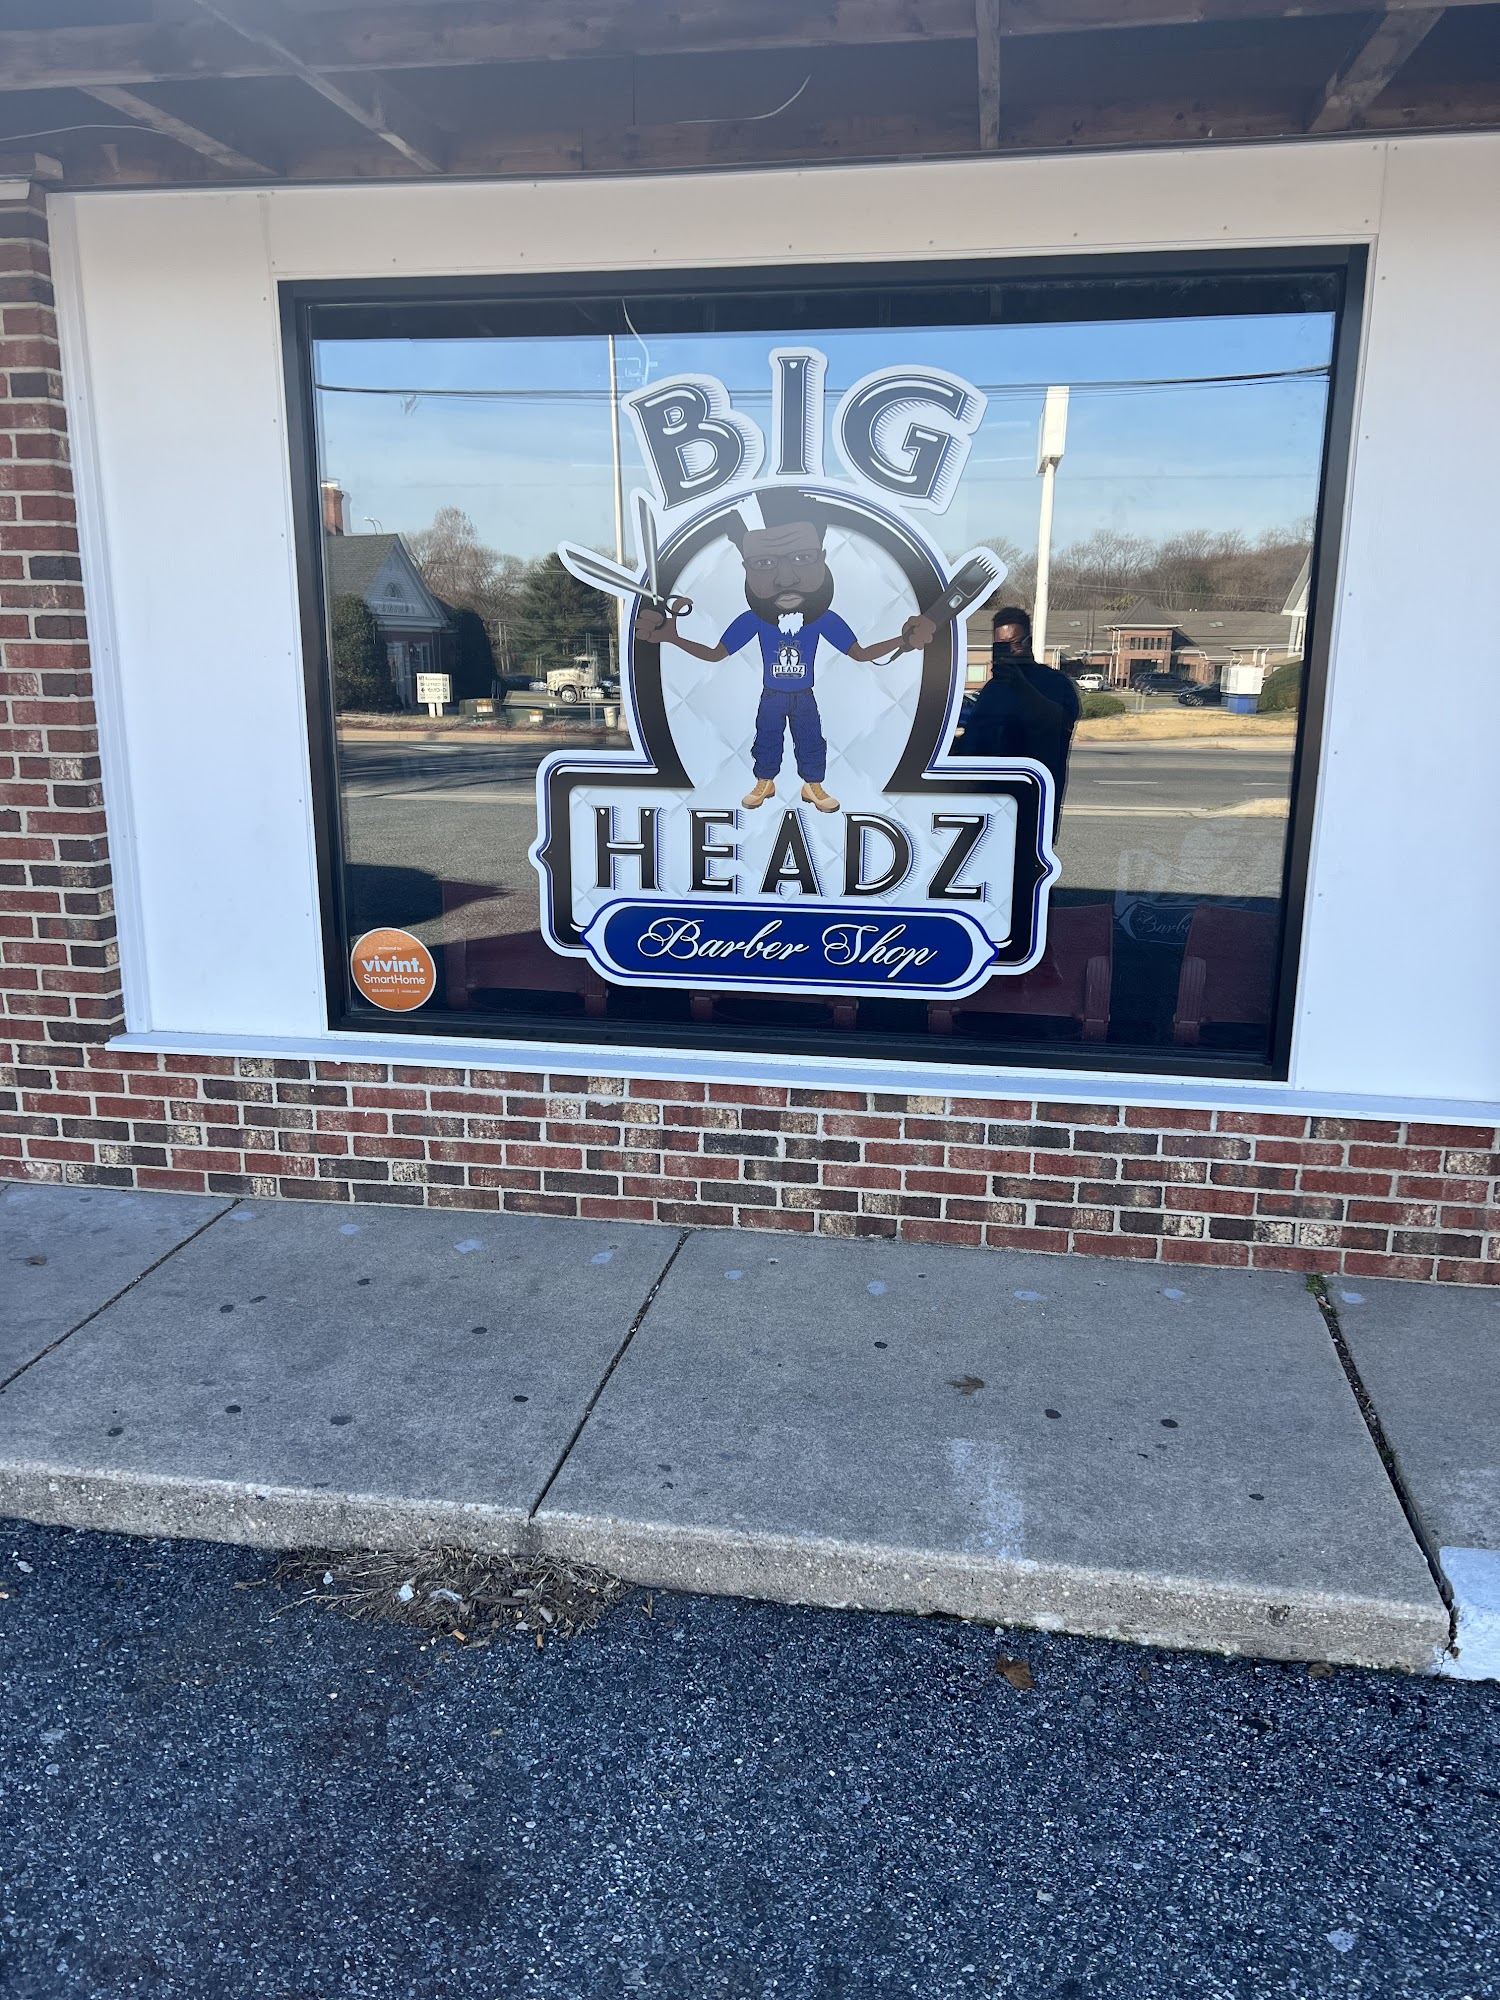 Big Headz Barbershop